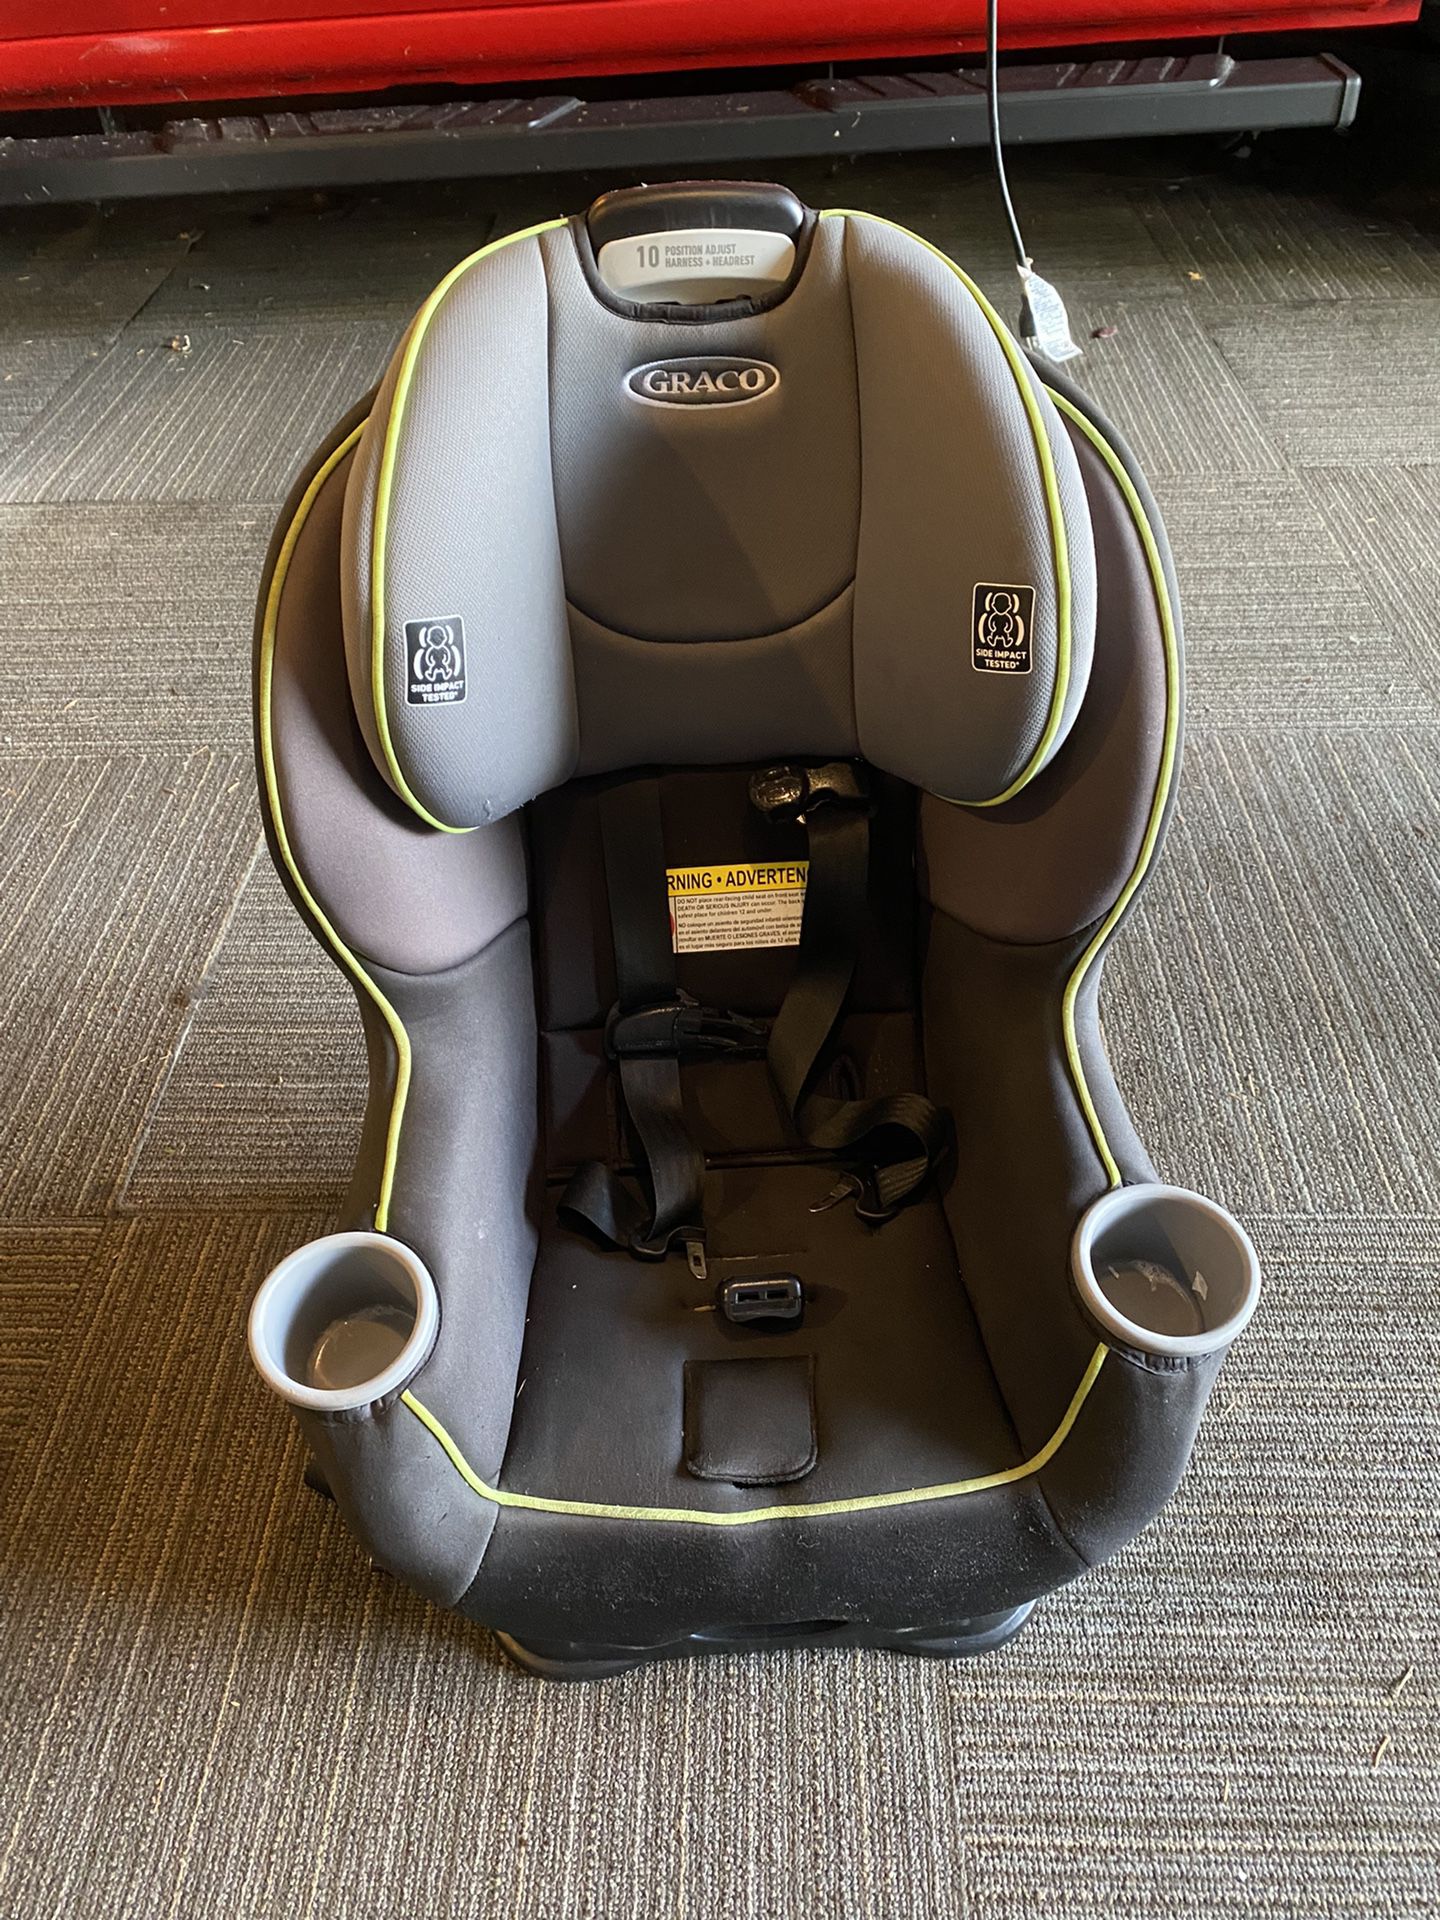 graco baby car seat